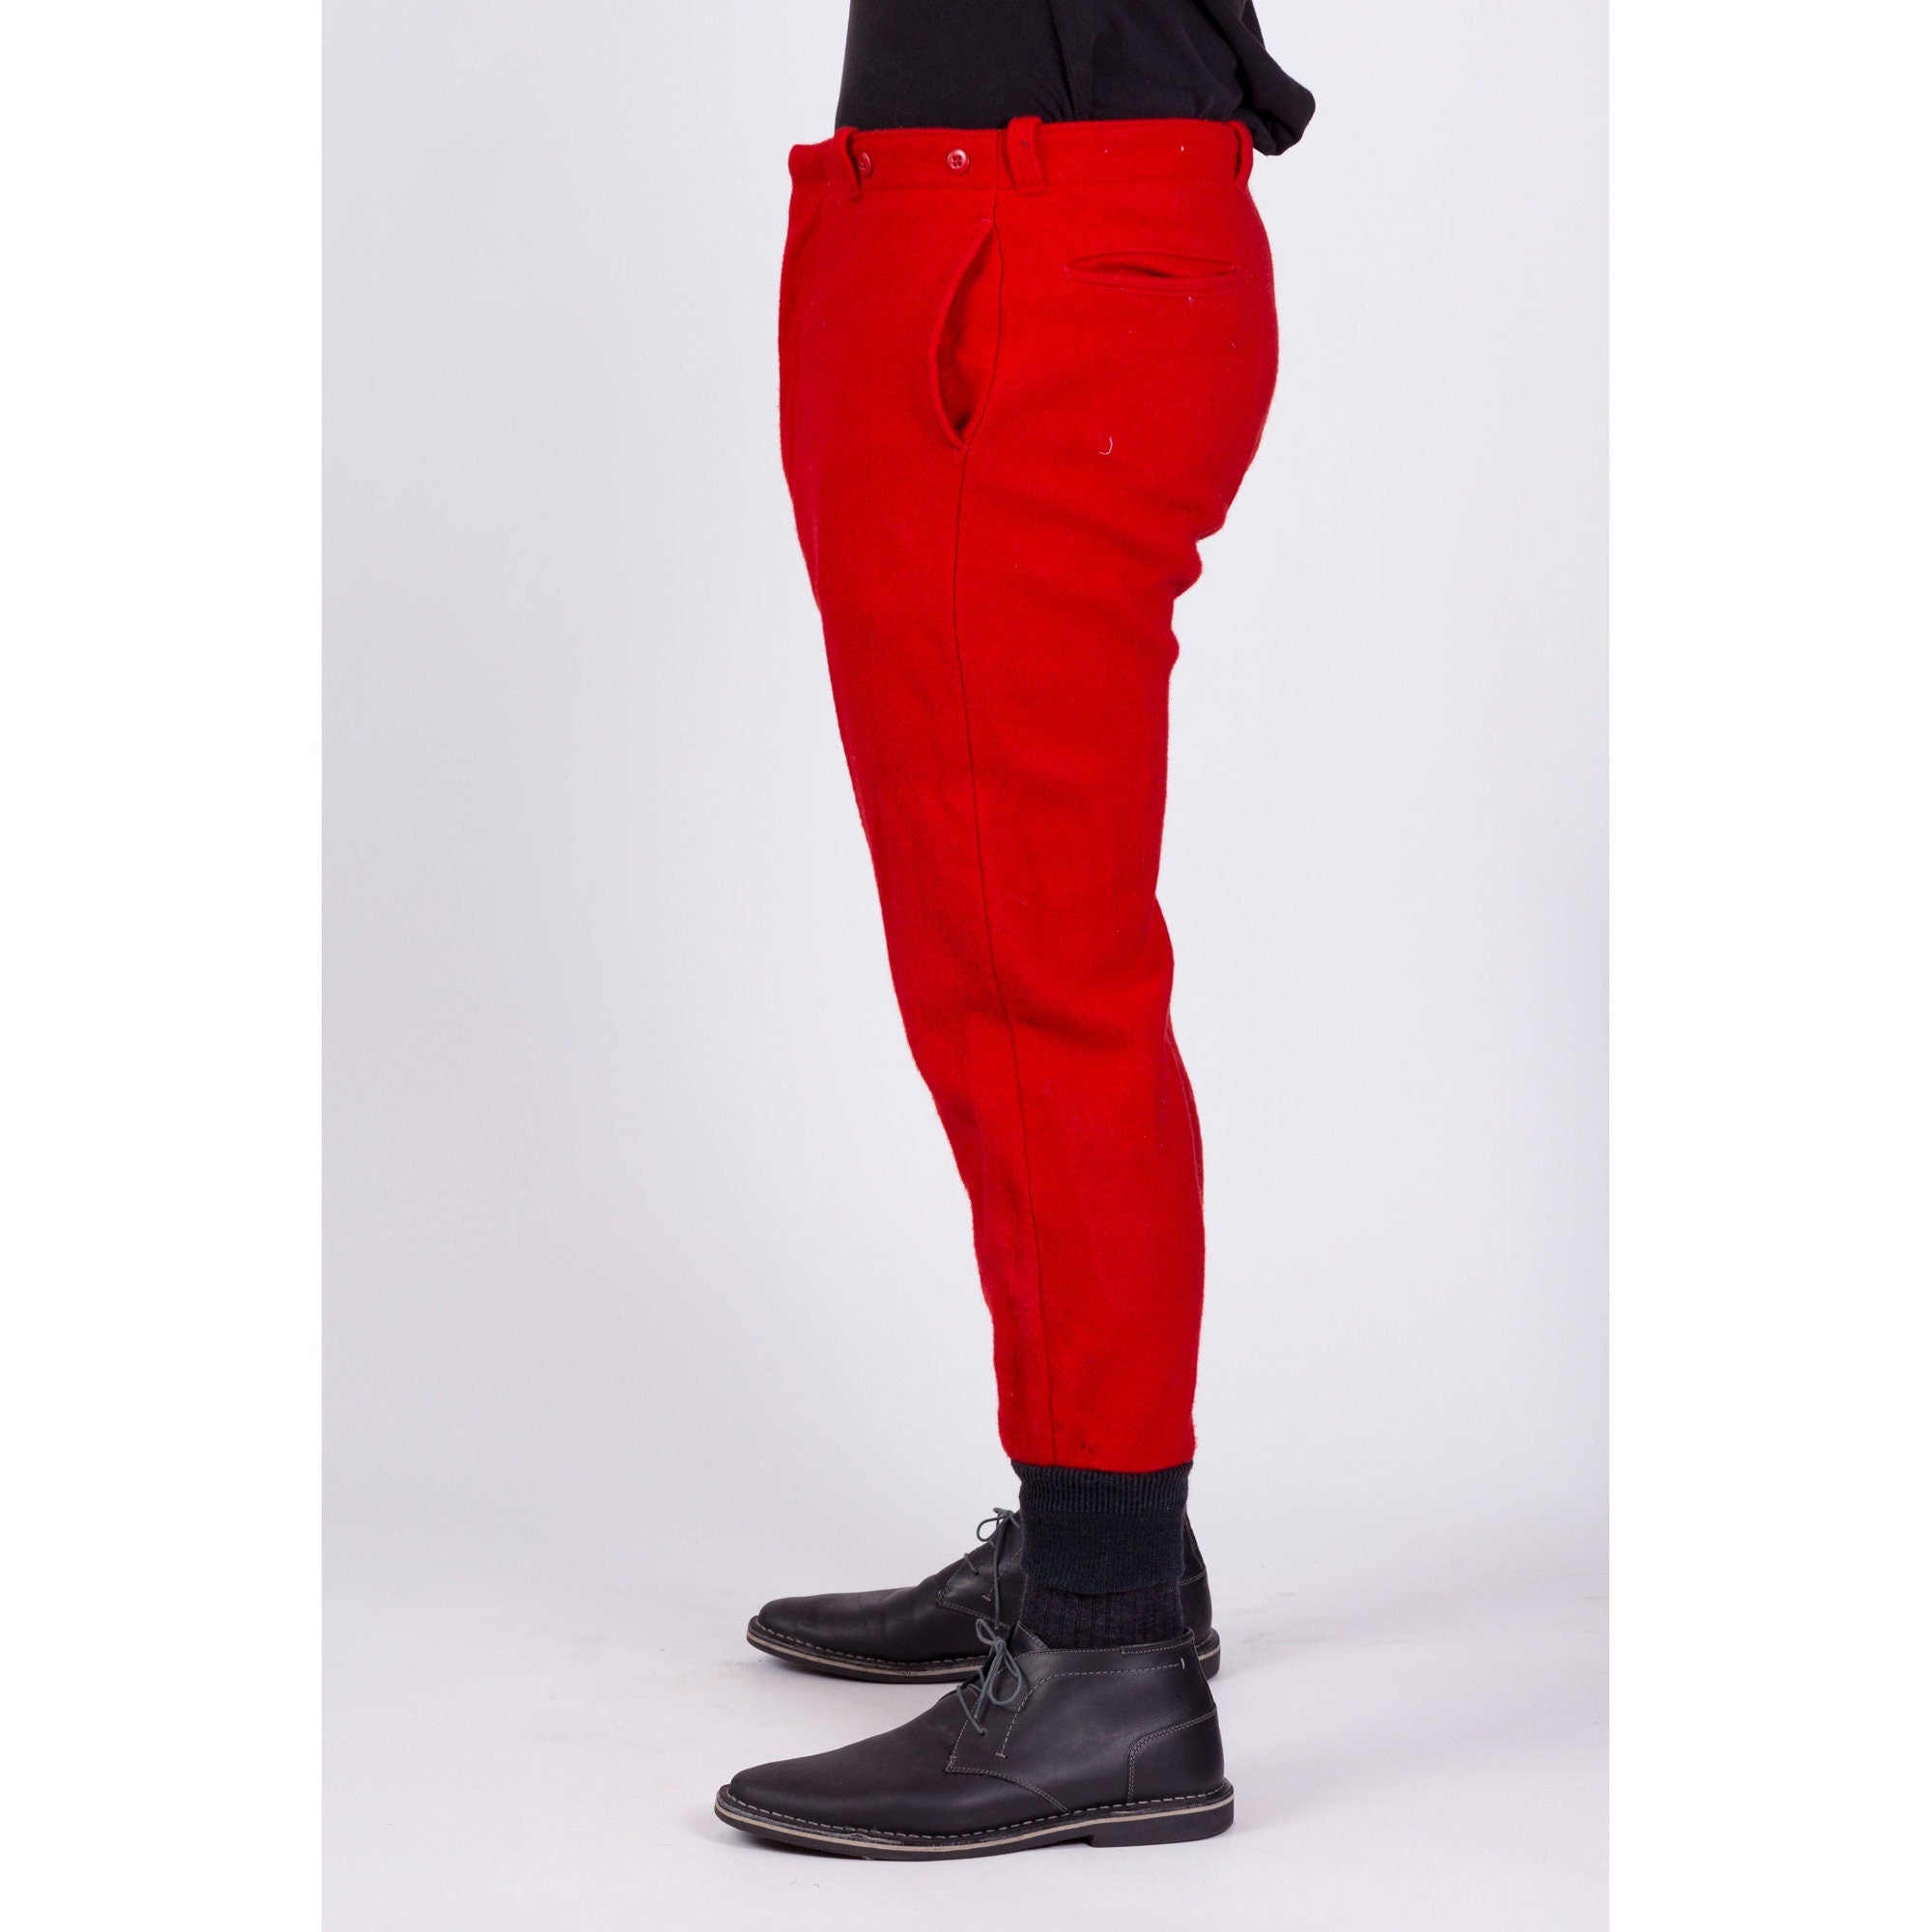 Men's Fashion Plaid Pants Red and Black - Etsy